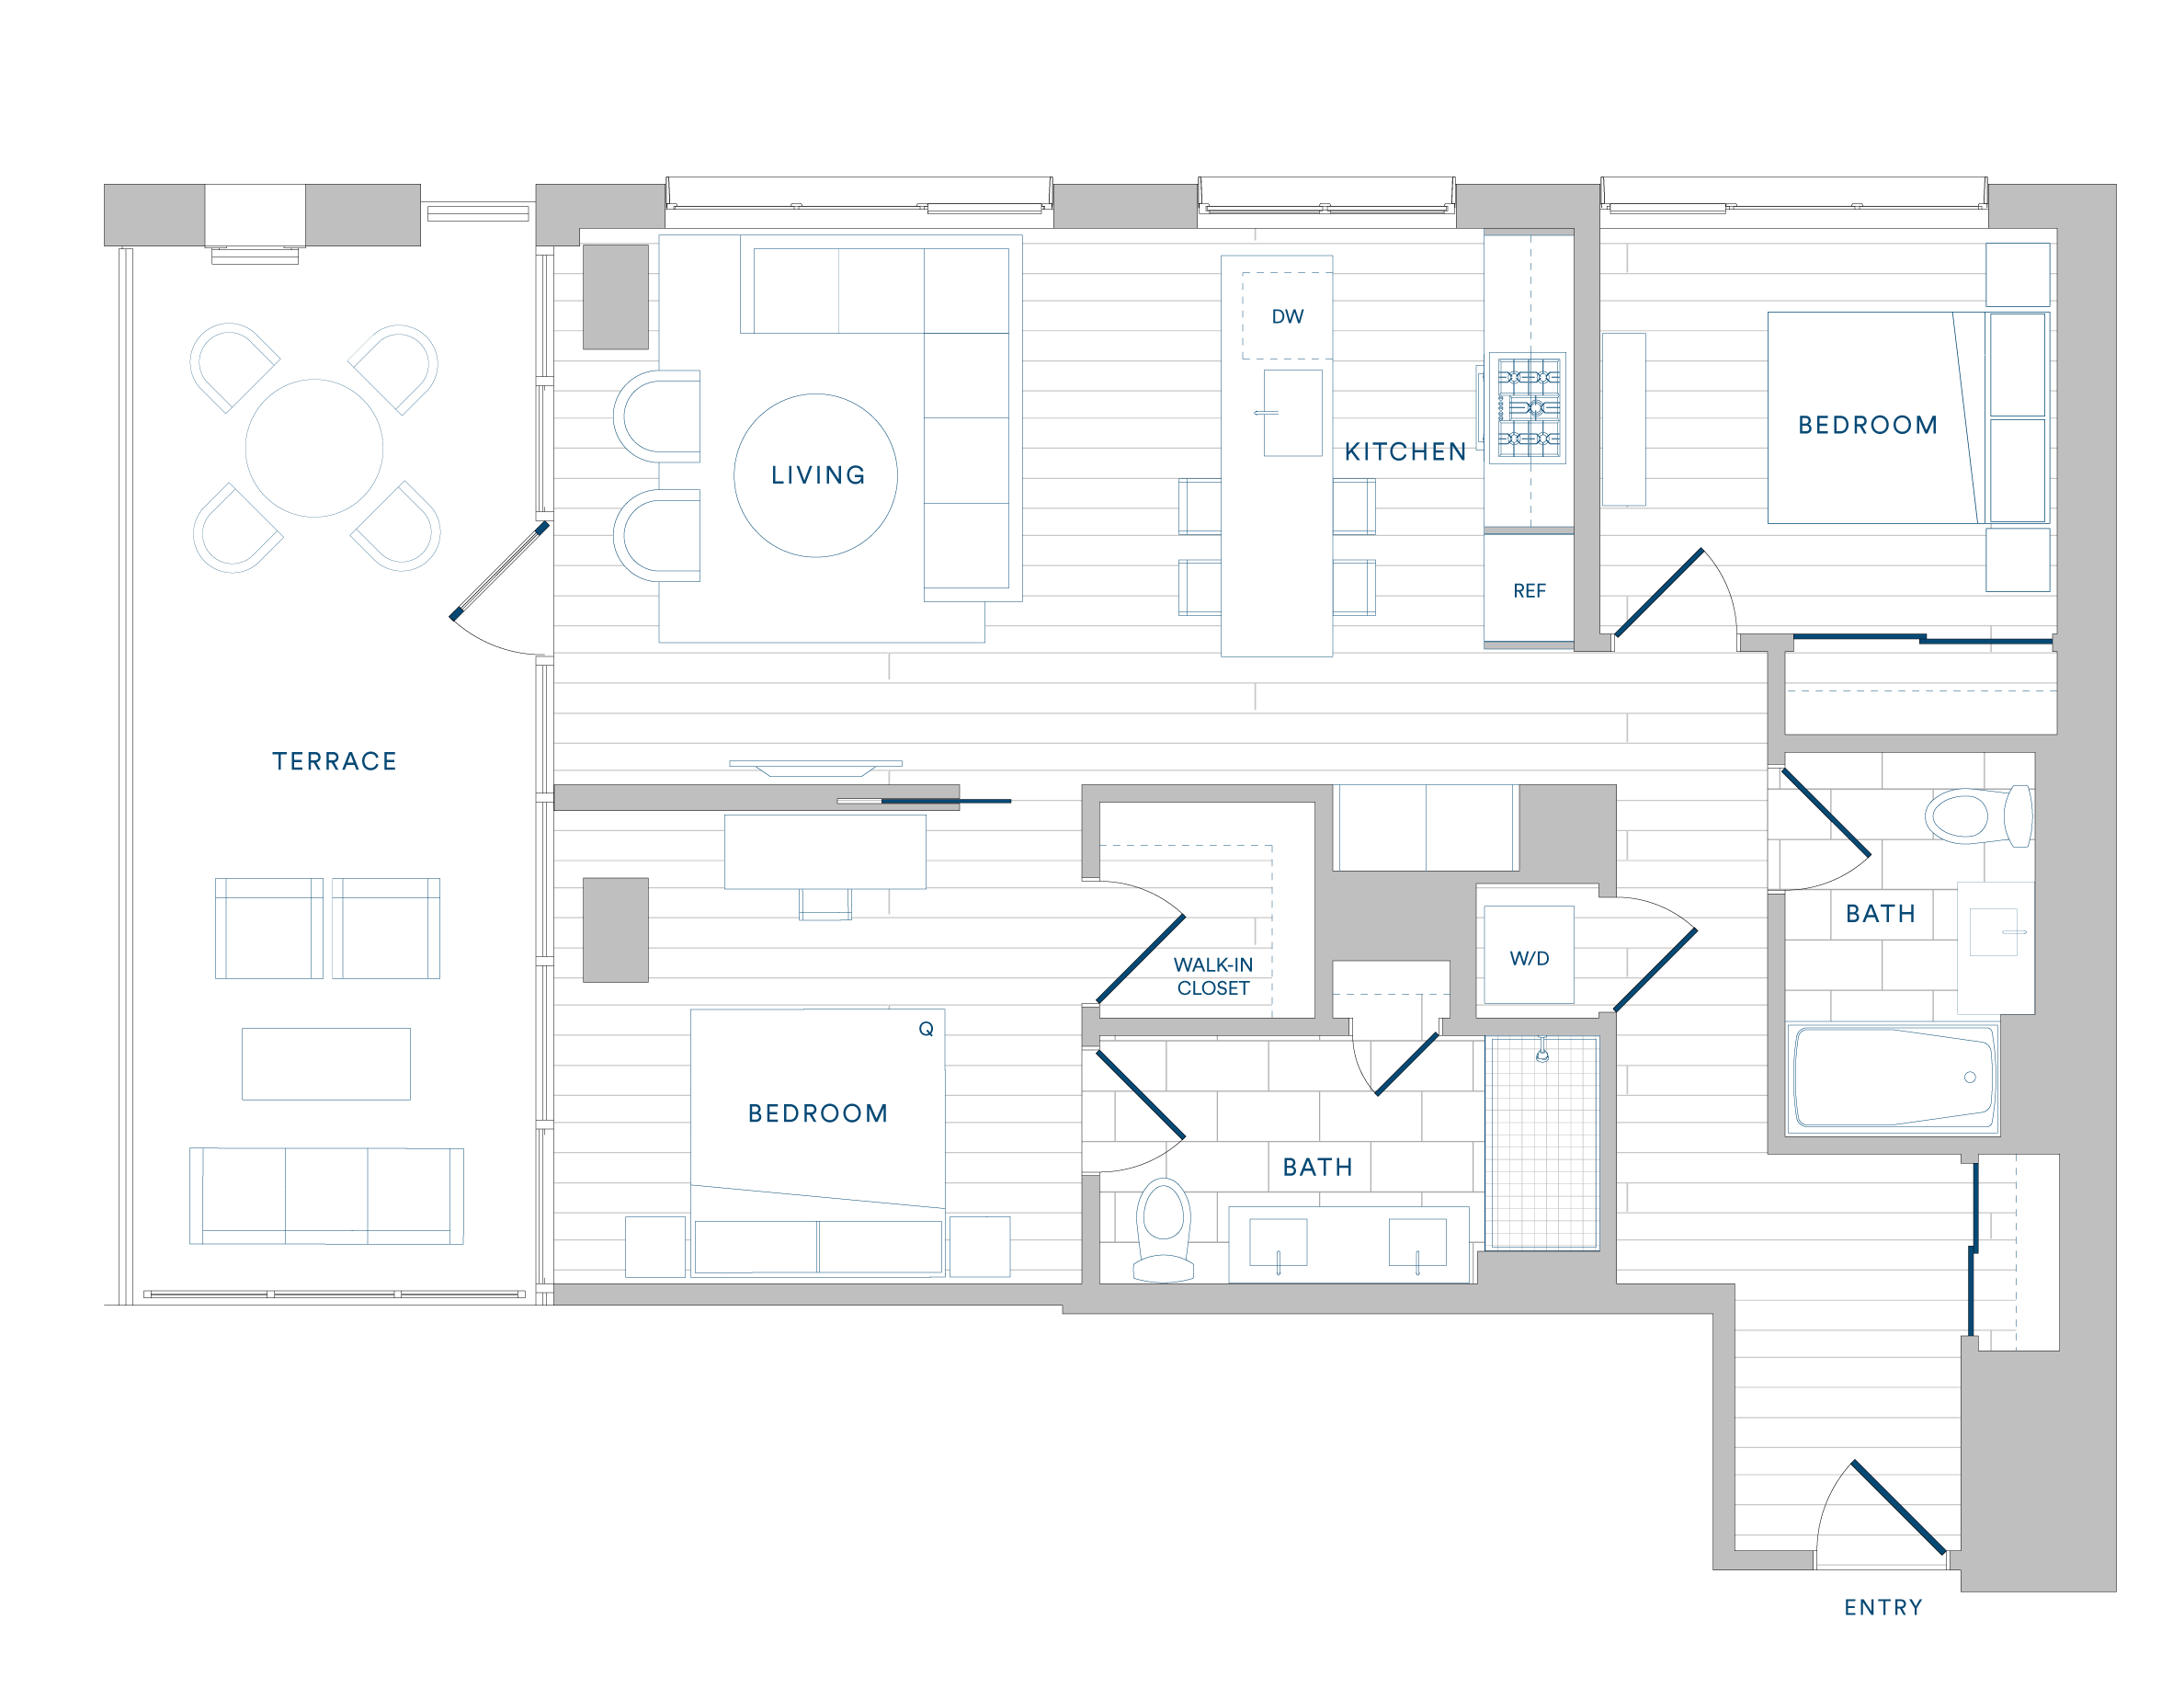 Floorplan for Apartment #405, 2 bedroom unit at Margarite